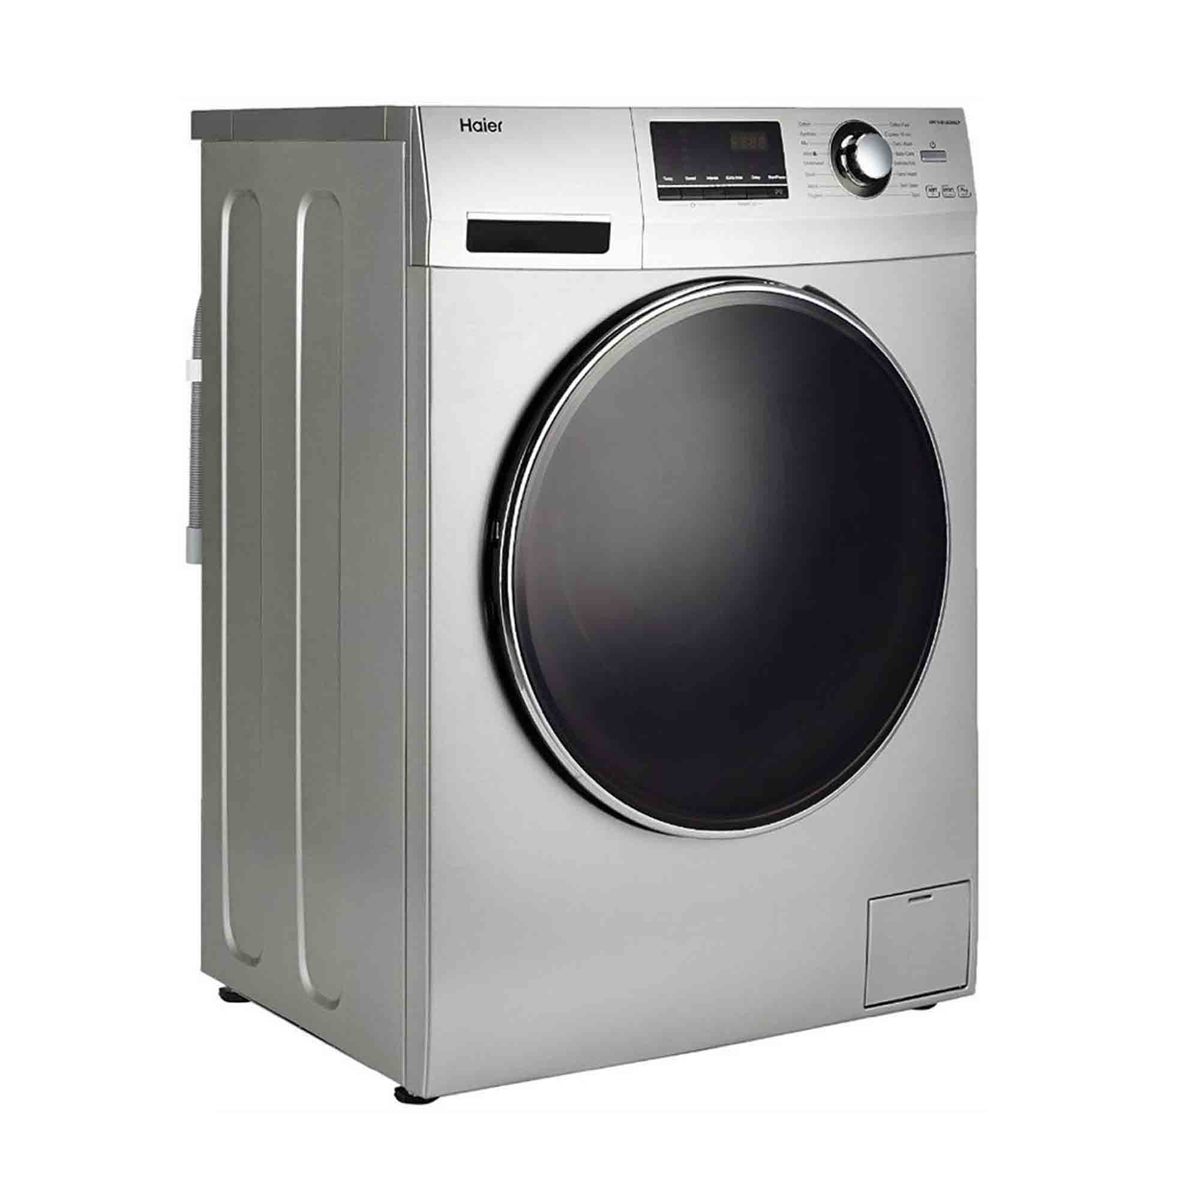 Haier Front Load Washing Machine HW70126736S 7Kg